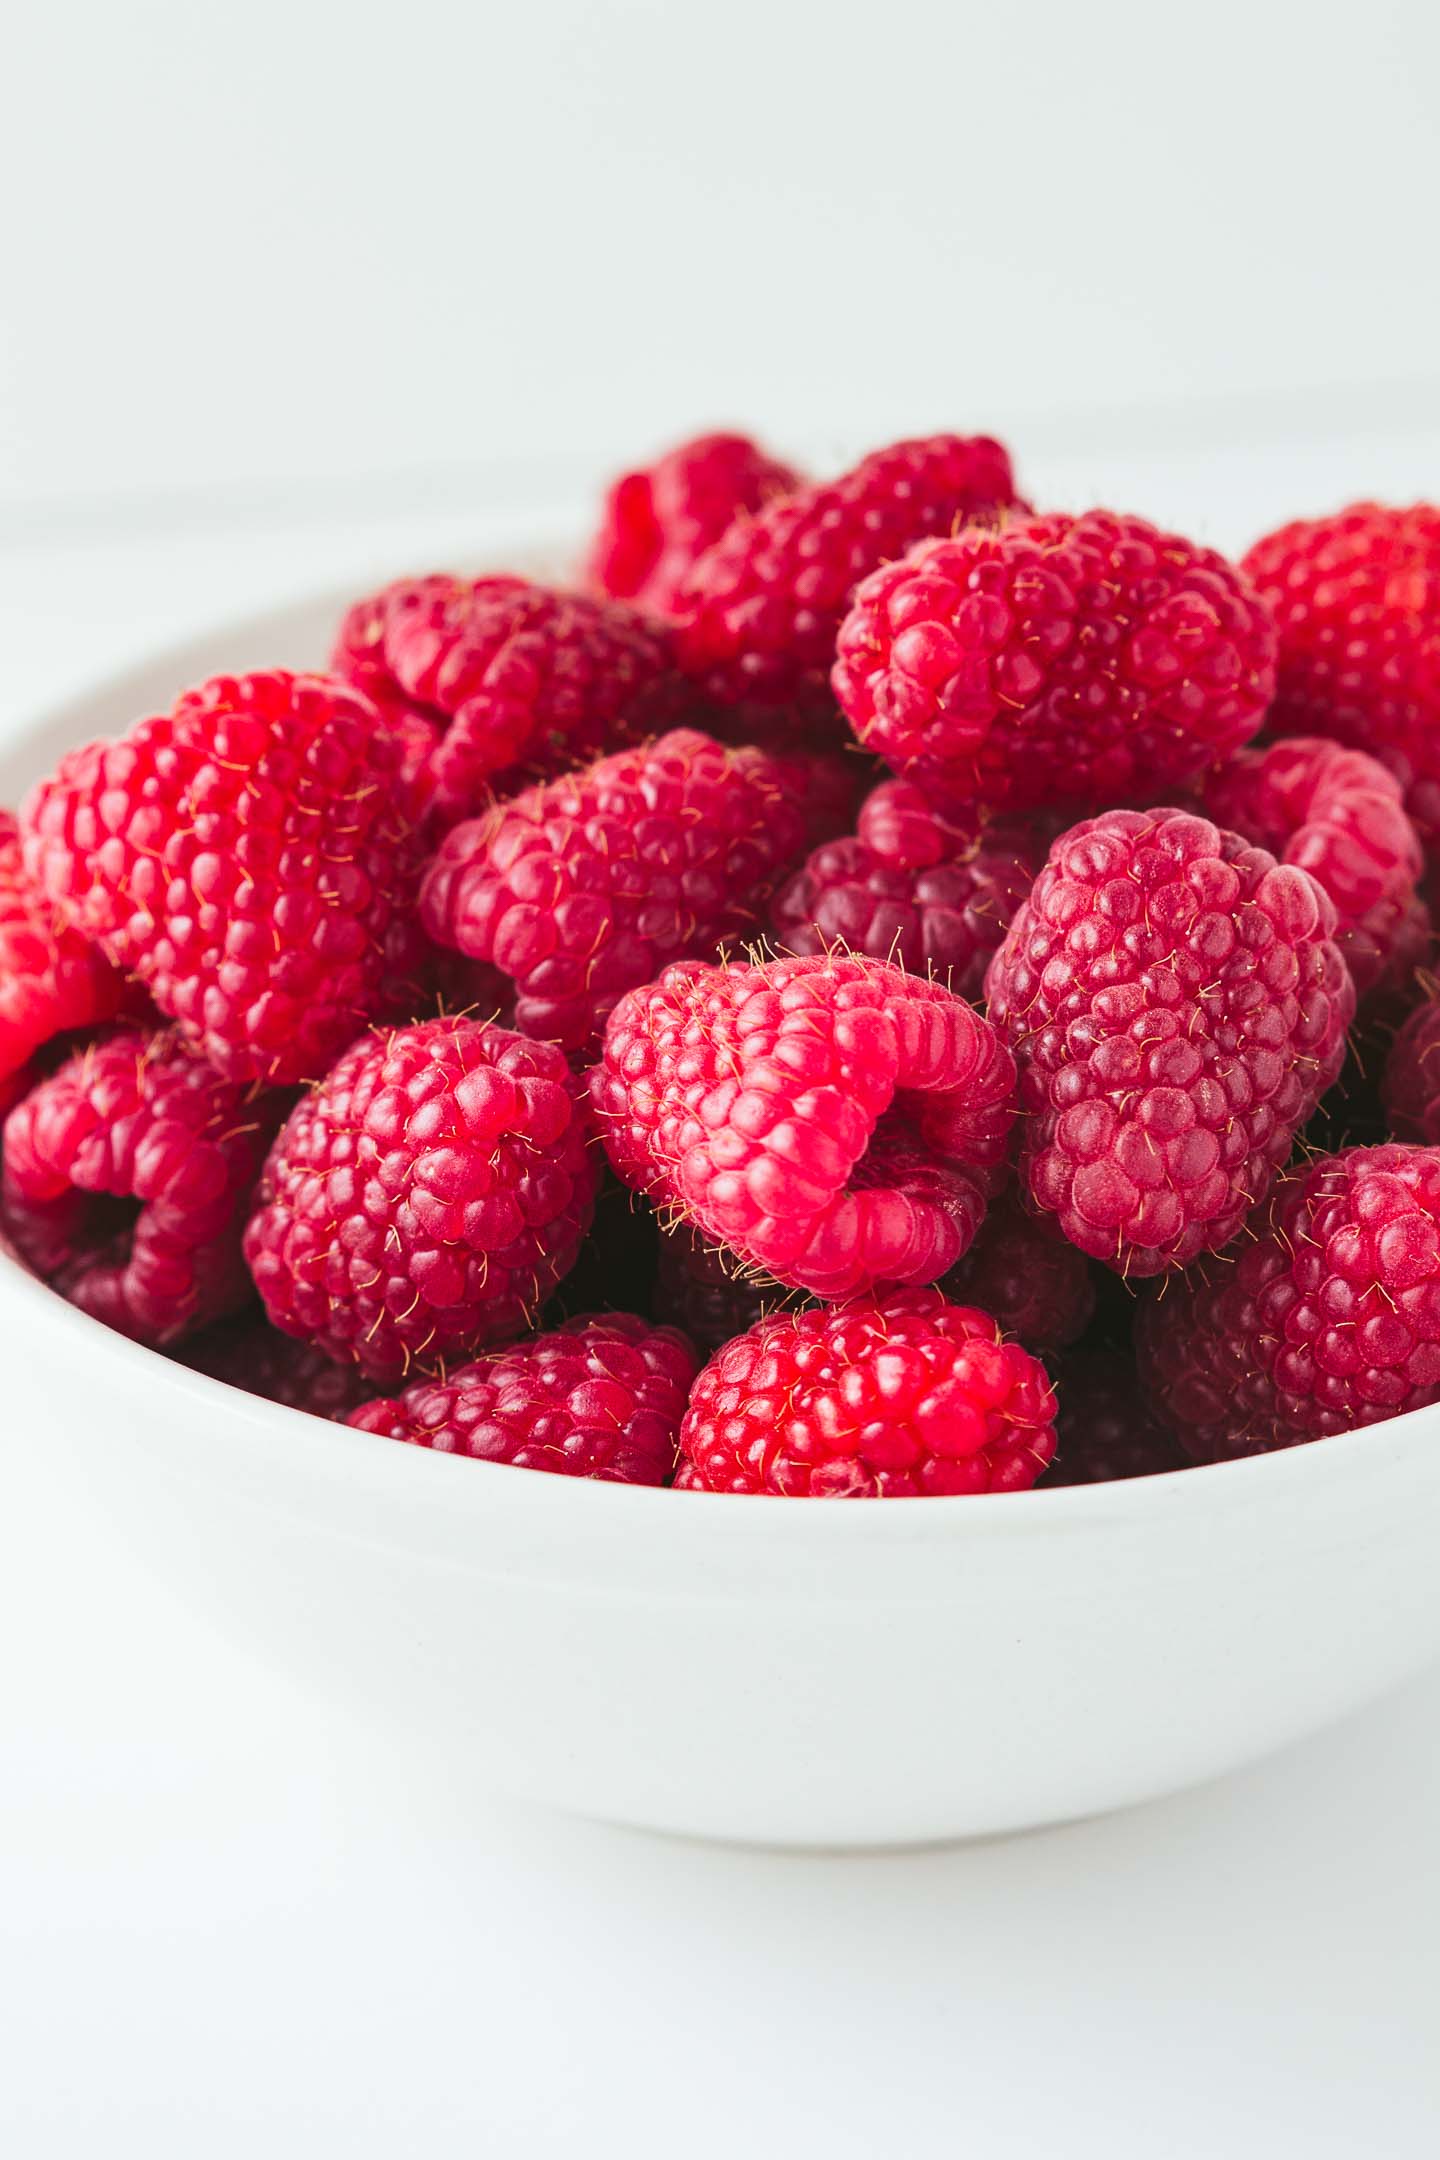 Bowl of fresh raspberries.